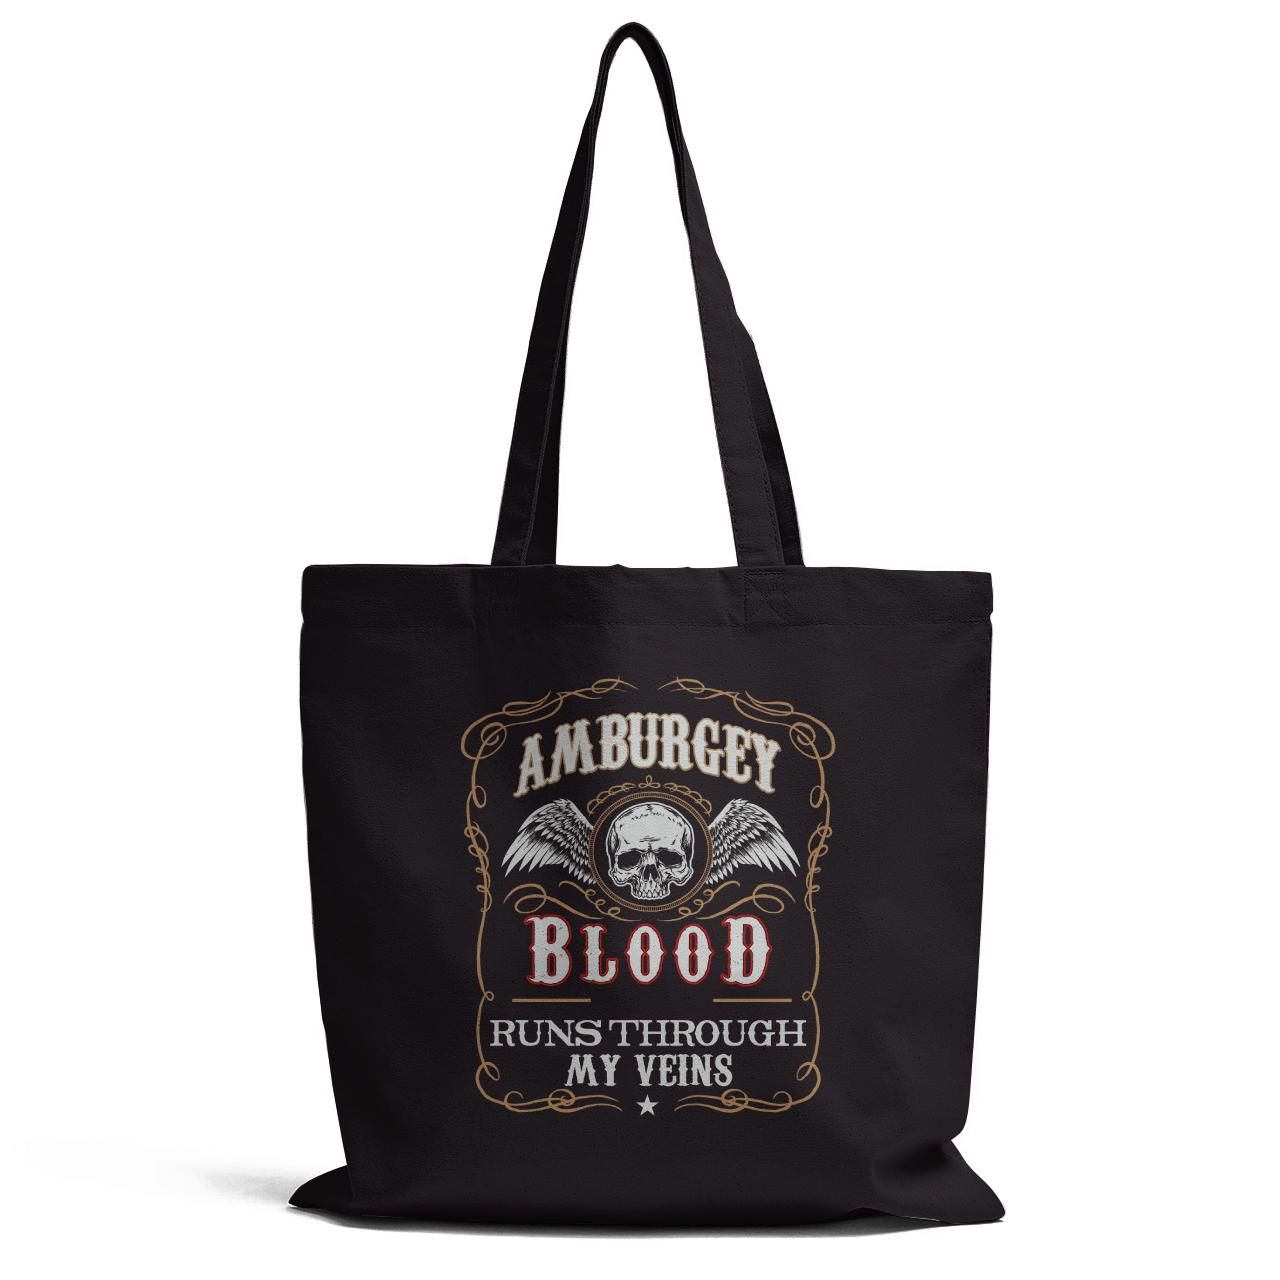 Amburgey Blood Runs Through My Veins Tote Bag